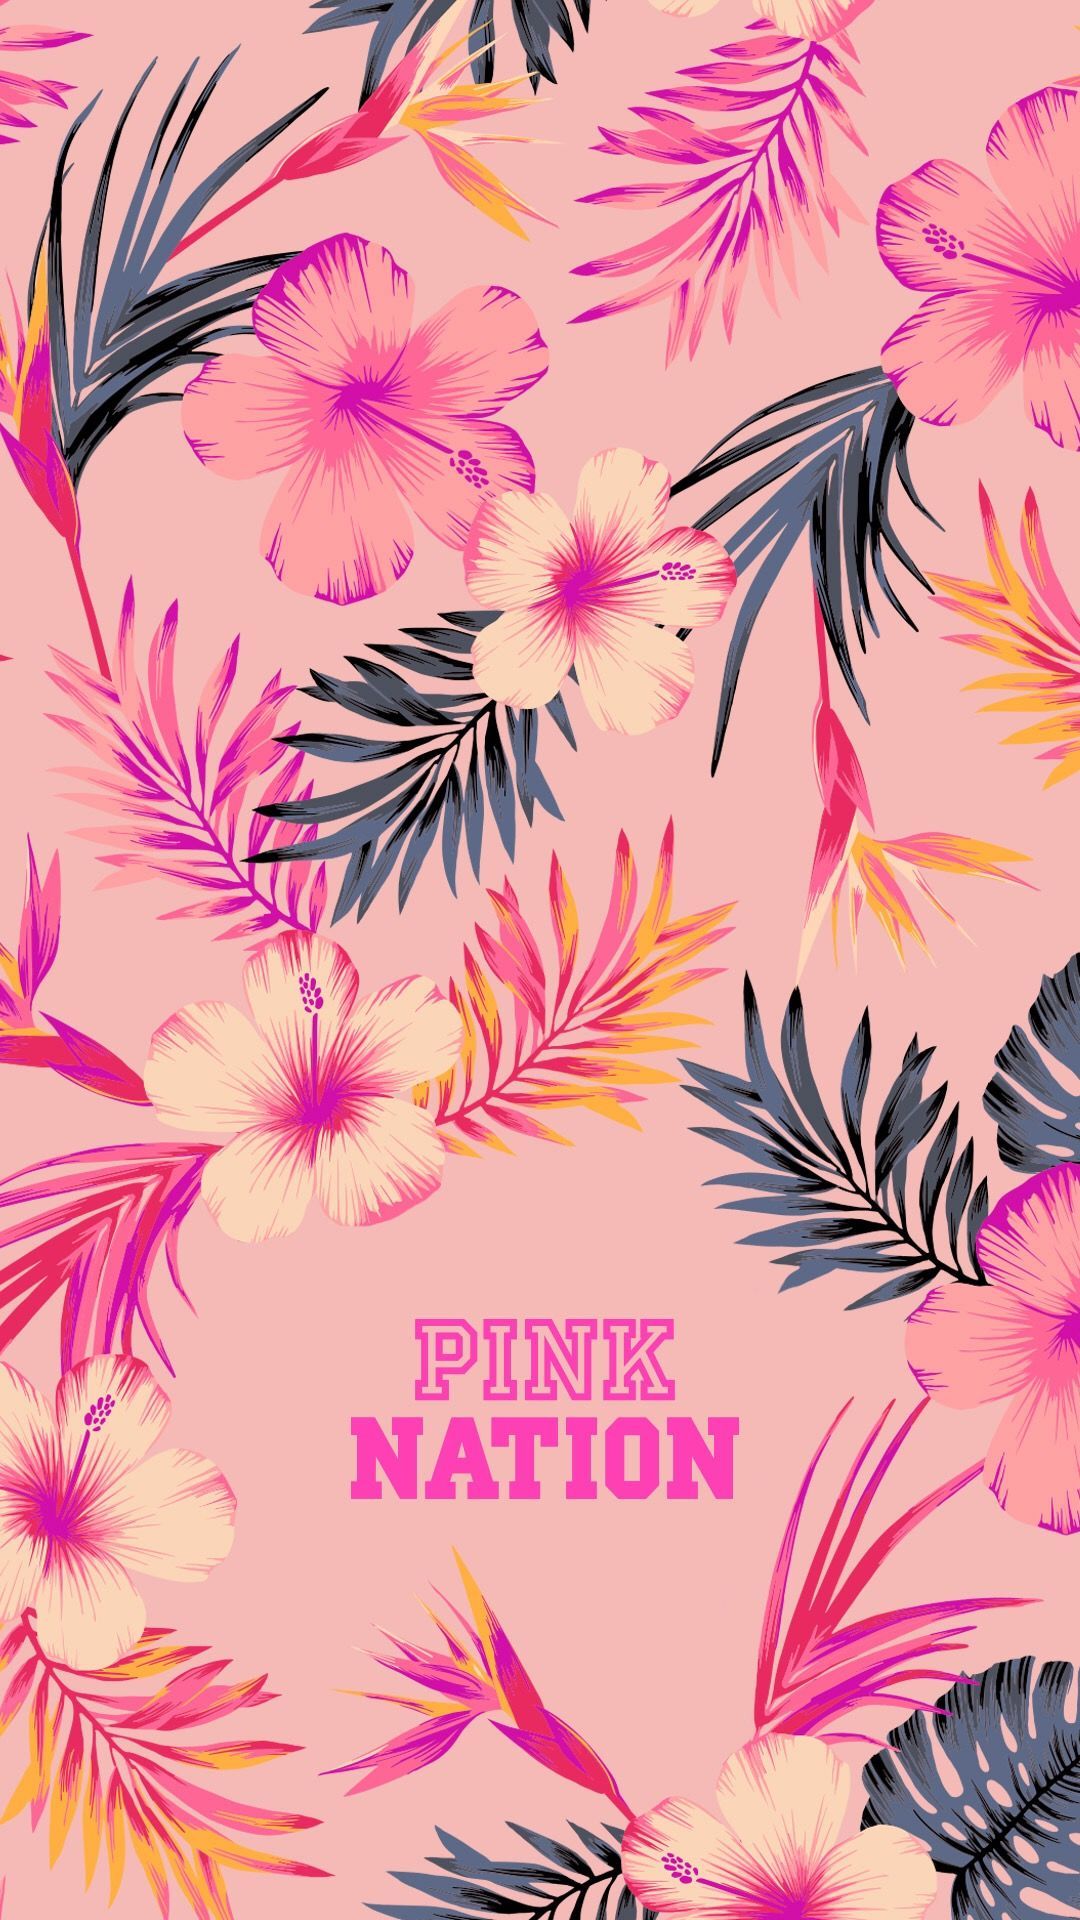 VS Pink iPhone Wallpaper. Pink wallpaper iphone, Pink nation wallpaper, Victoria secret pink wallpaper